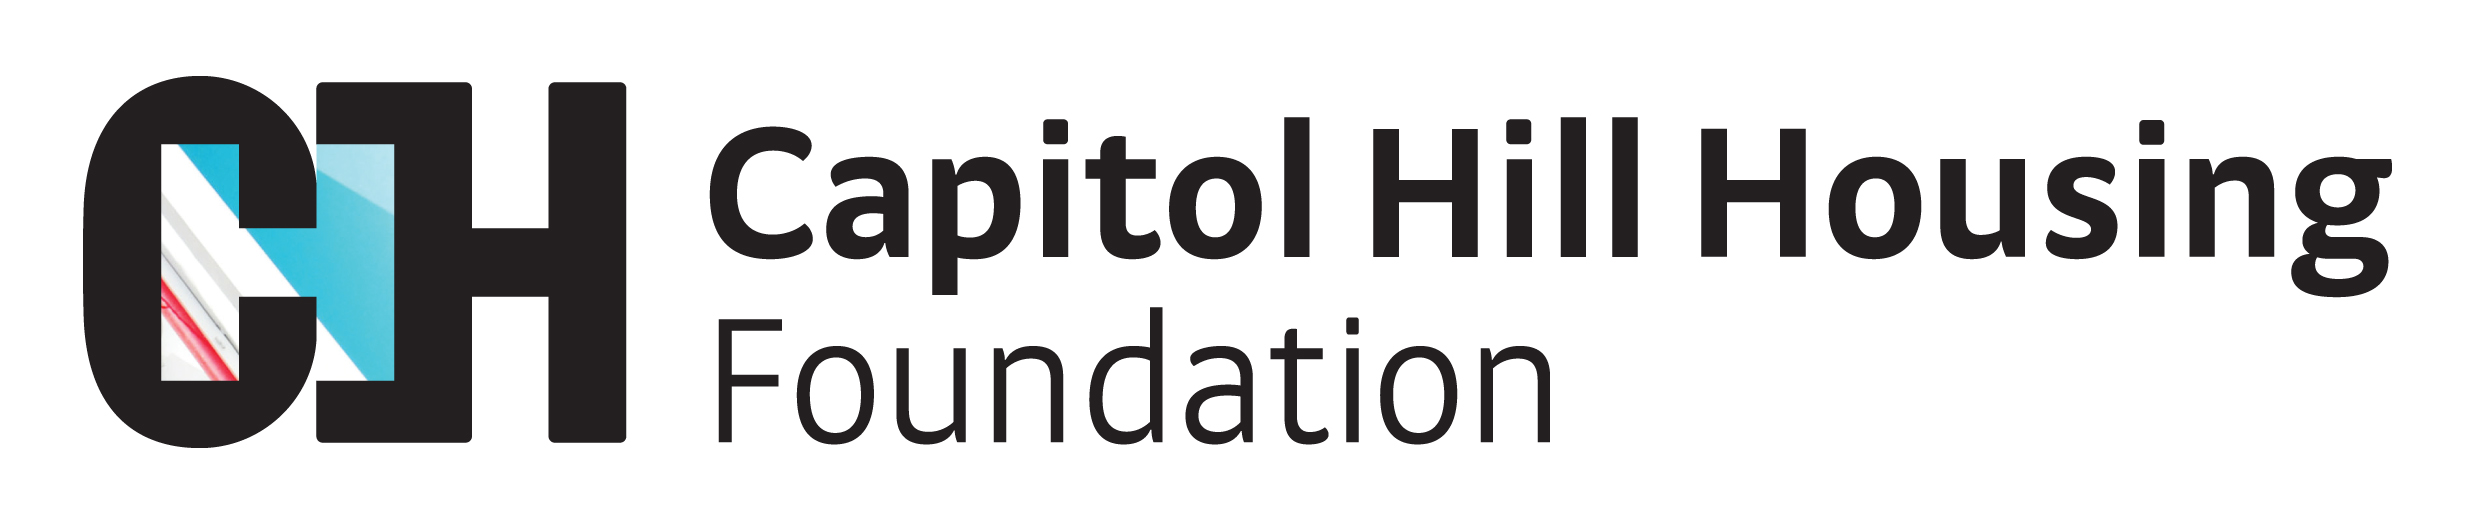 CHH Foundation Logo_color